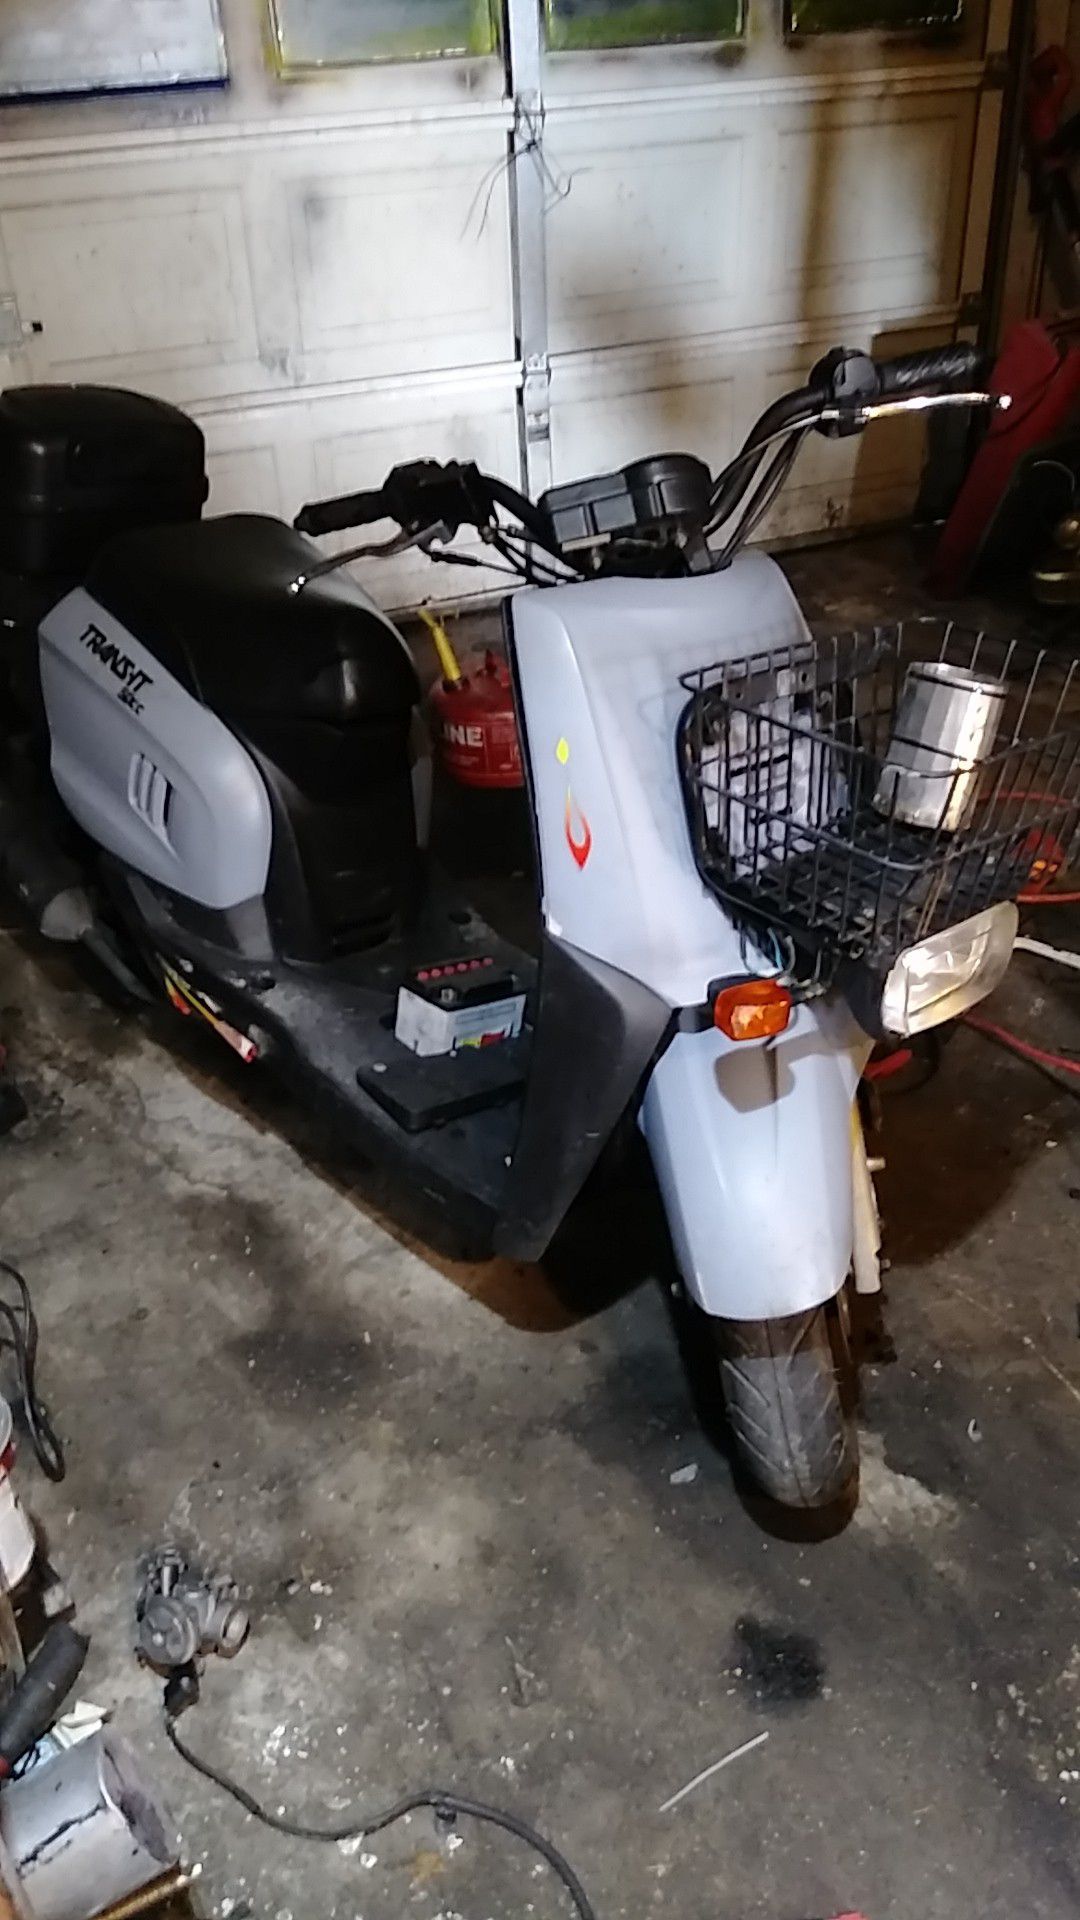 50cc transit scooter